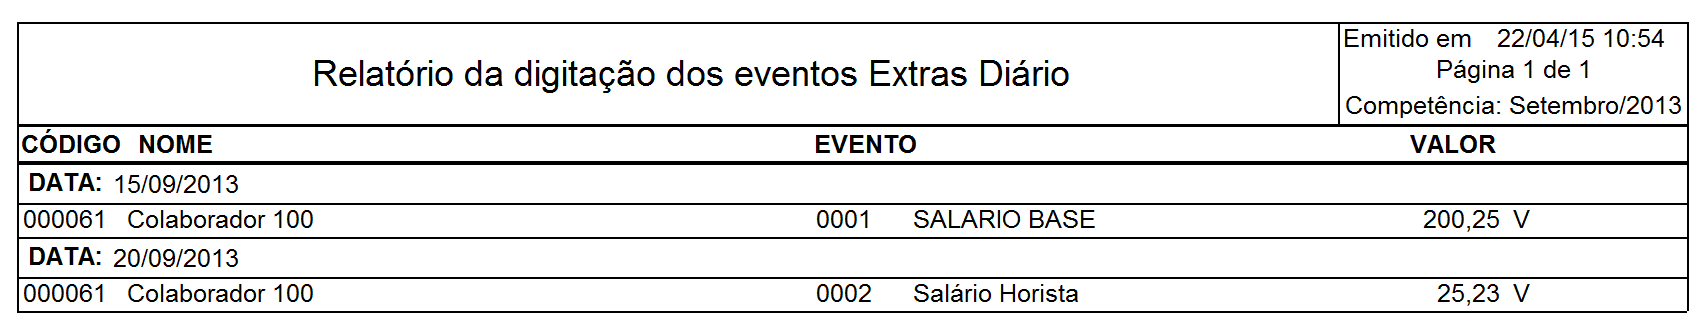 fp_relacao_eventos_extras_diarios_por_data_2.png